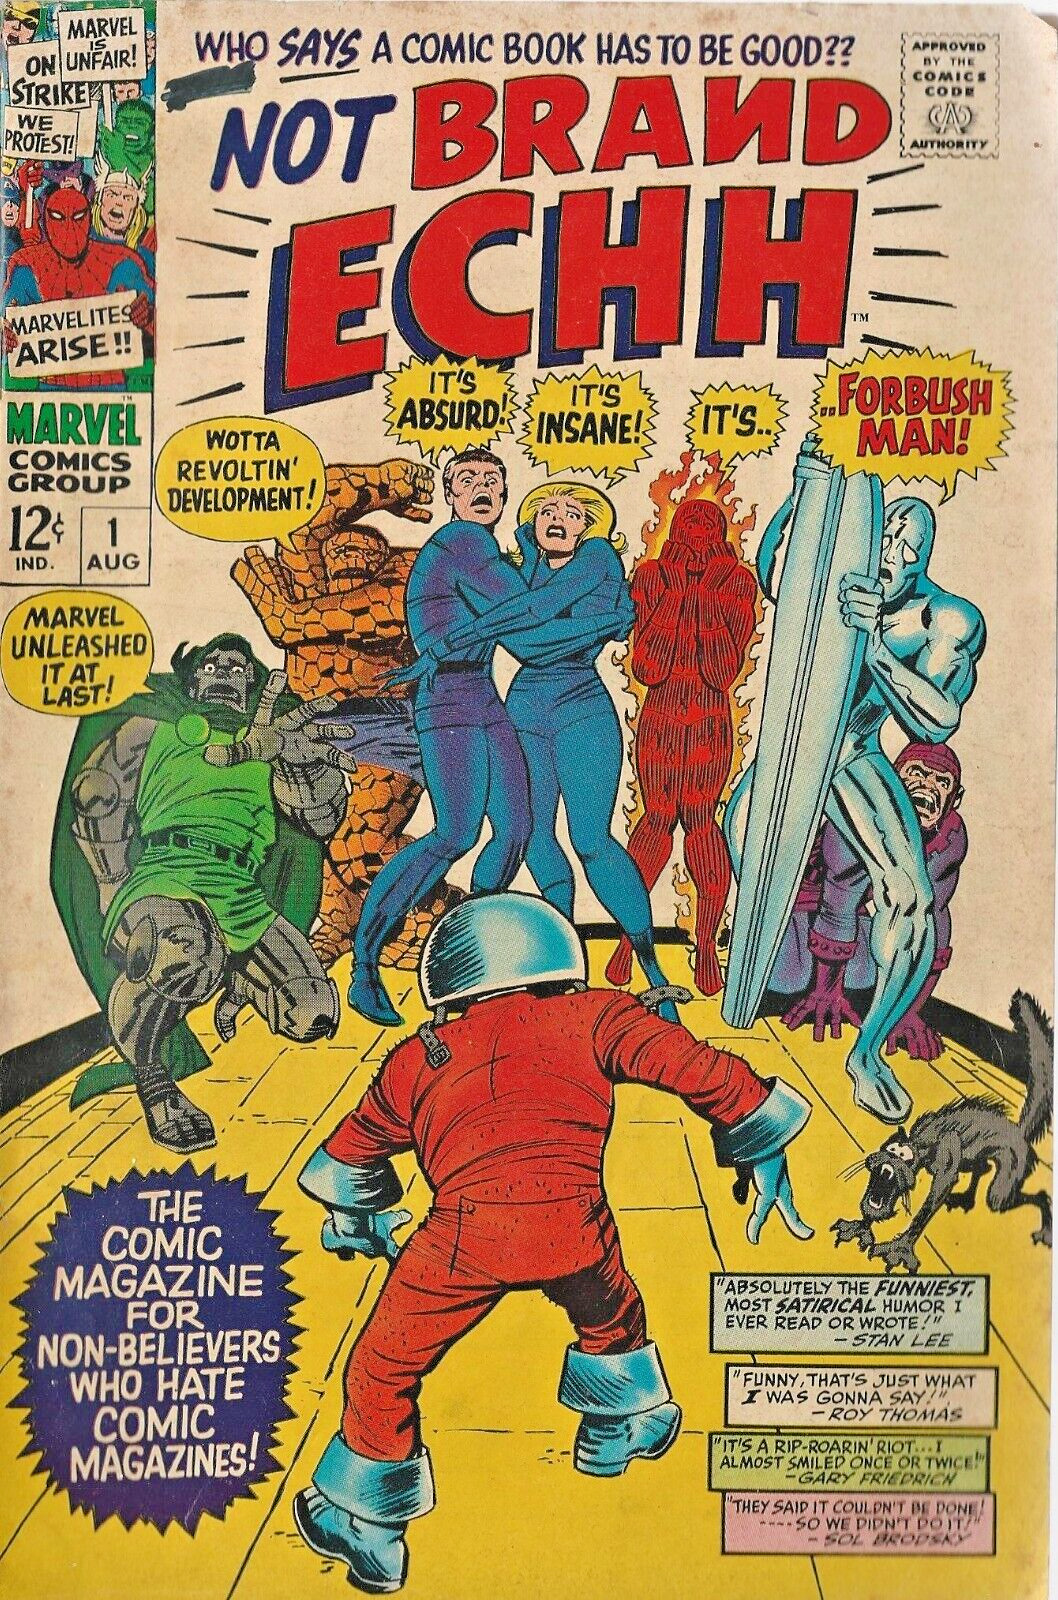 Marvel Comics Not Brand Echh #1 Silver Age Parody Satire Forbush Man